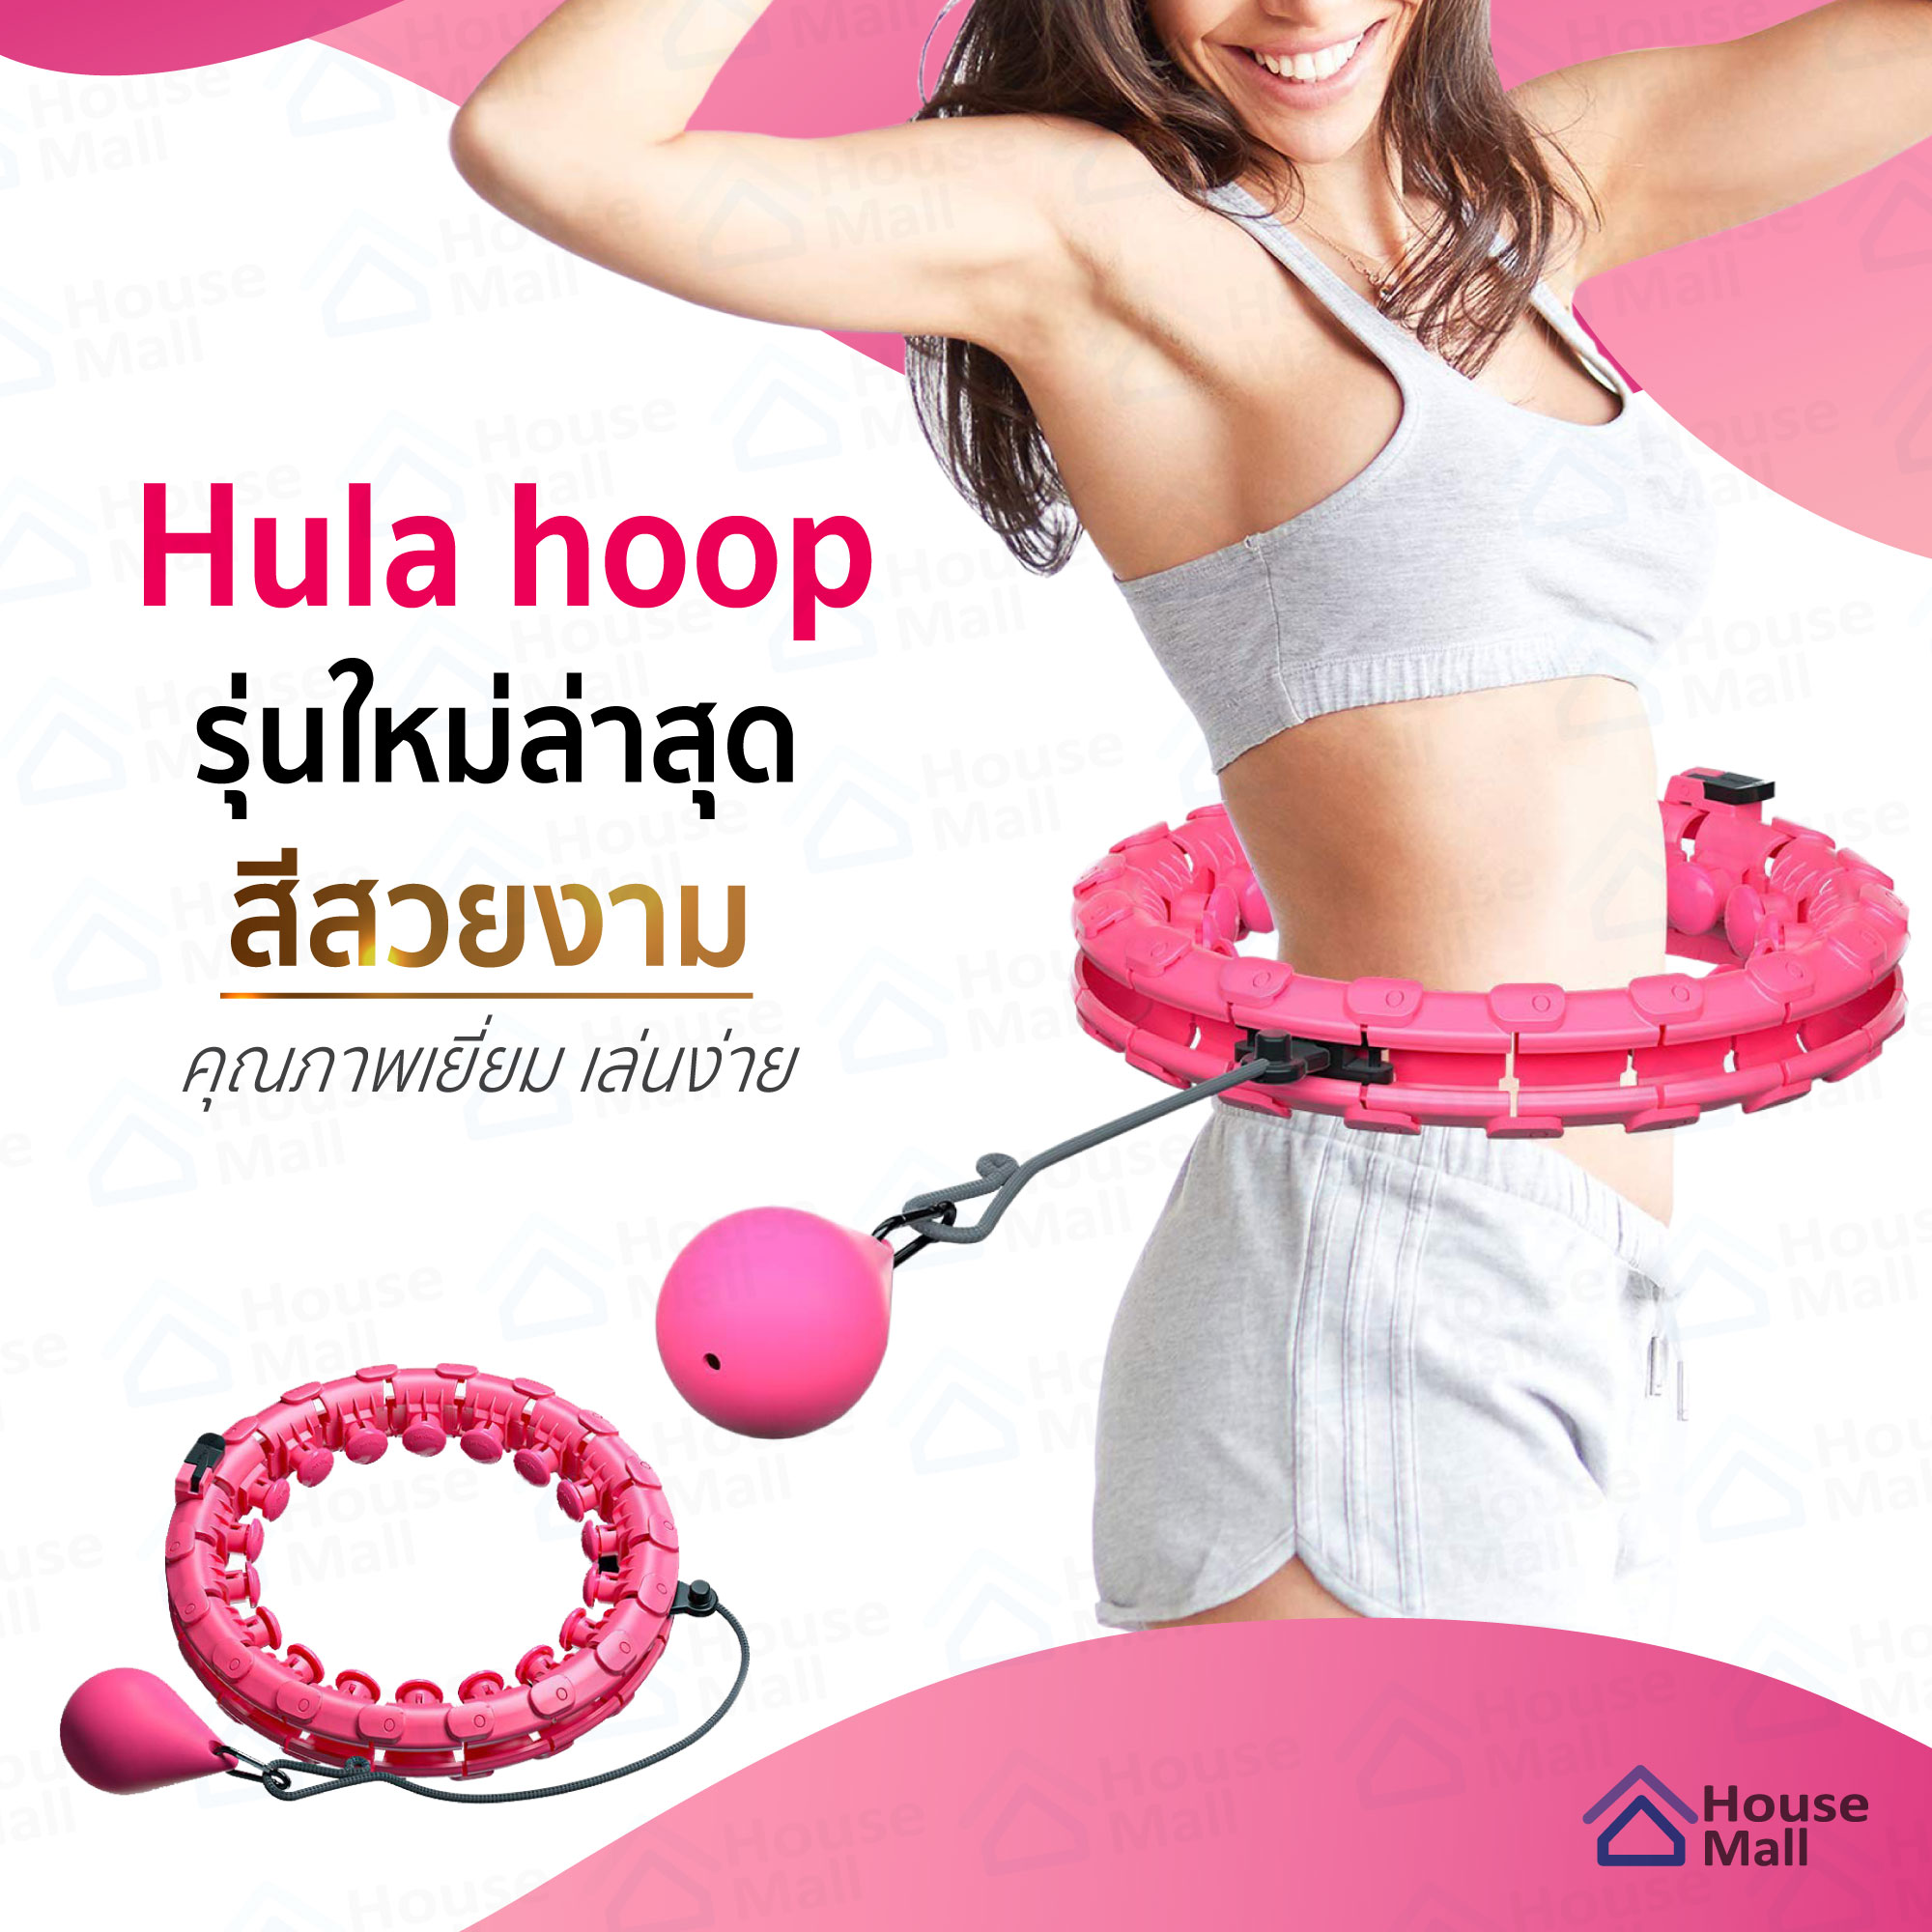 hula hoop ฮูลาฮูป รุ่นใหม่ล่าสุด คุณภาพเยี่ยม สลายไขมัน 360 องศา เล่นง่าย เอว 52 นิ้ว ไซส์ใหญ่สุด